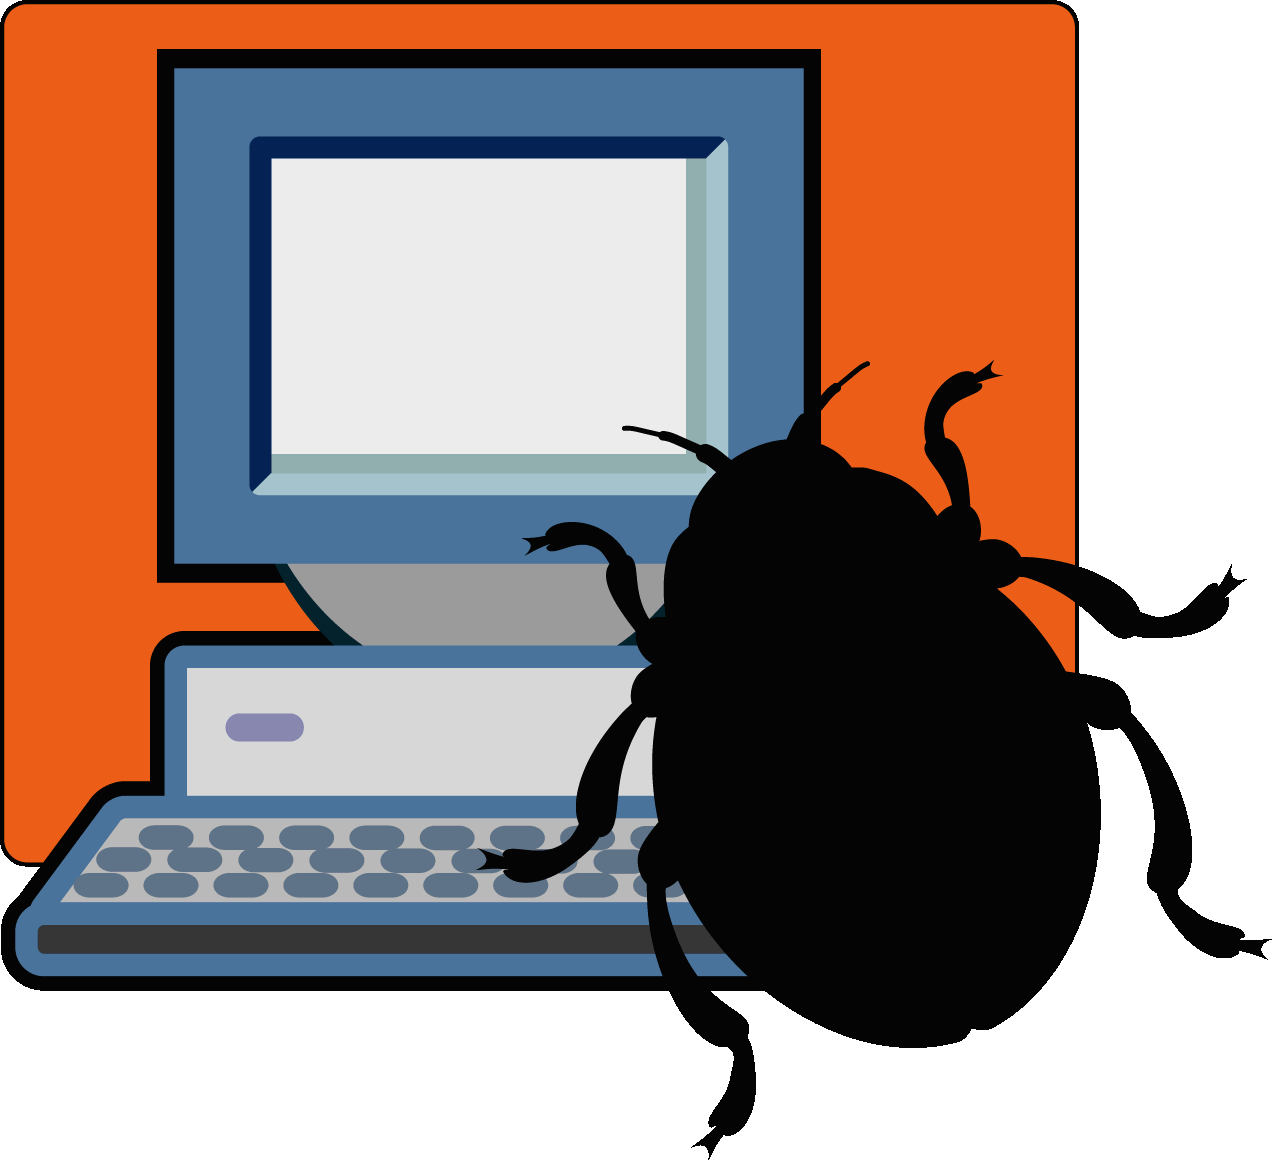 Virus pc. Компьютерные вирусы. Вирус на компьютере. Компьютерные вирусы картинки. Интернетные вирусы.